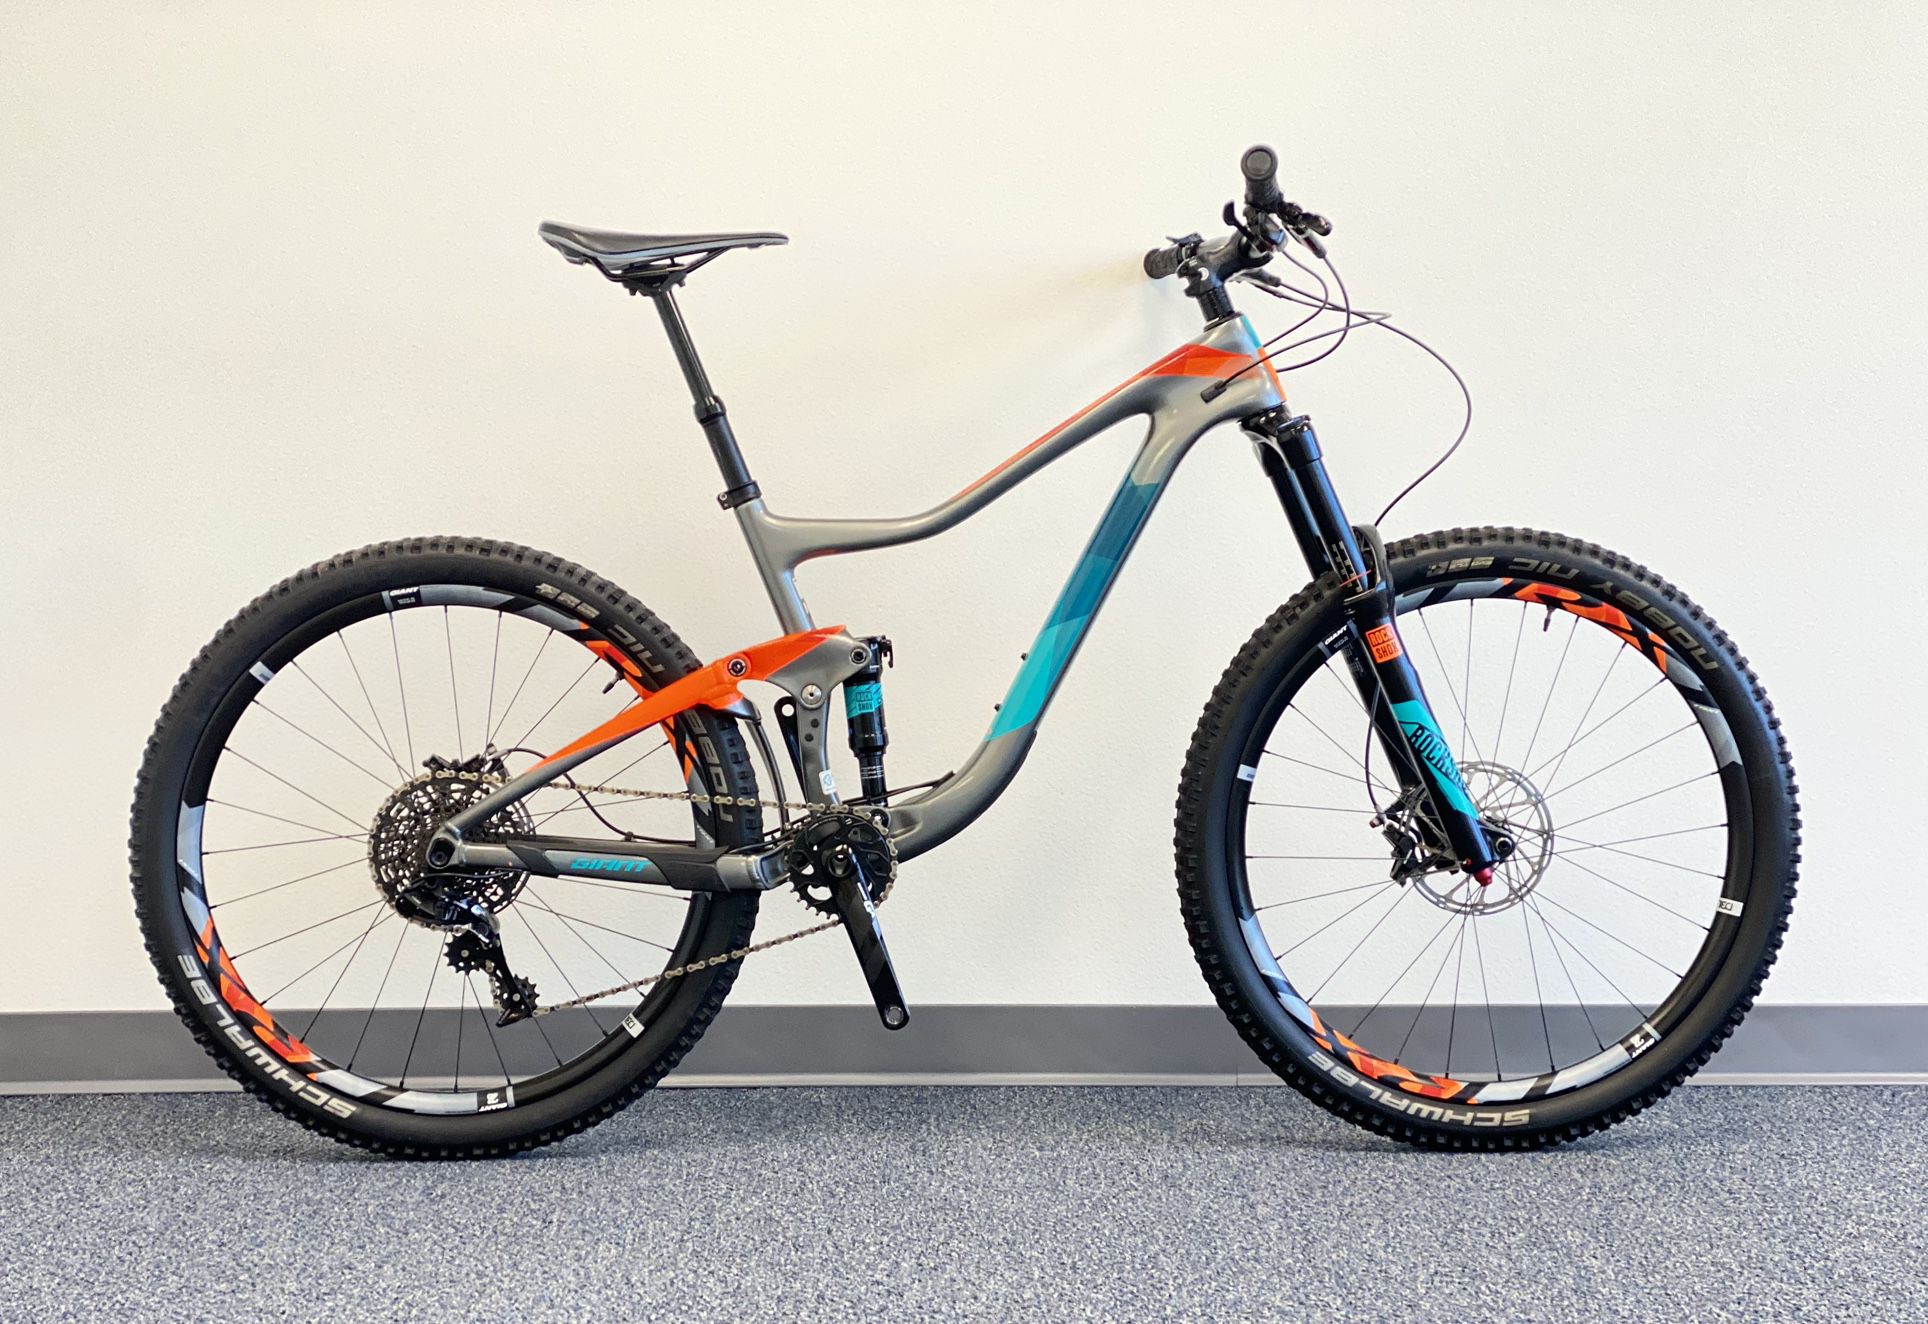 Giant Trance Advanced Pro 2 , Medium size, Full suspension carbon fiber mountain bike, Carbon wheels 